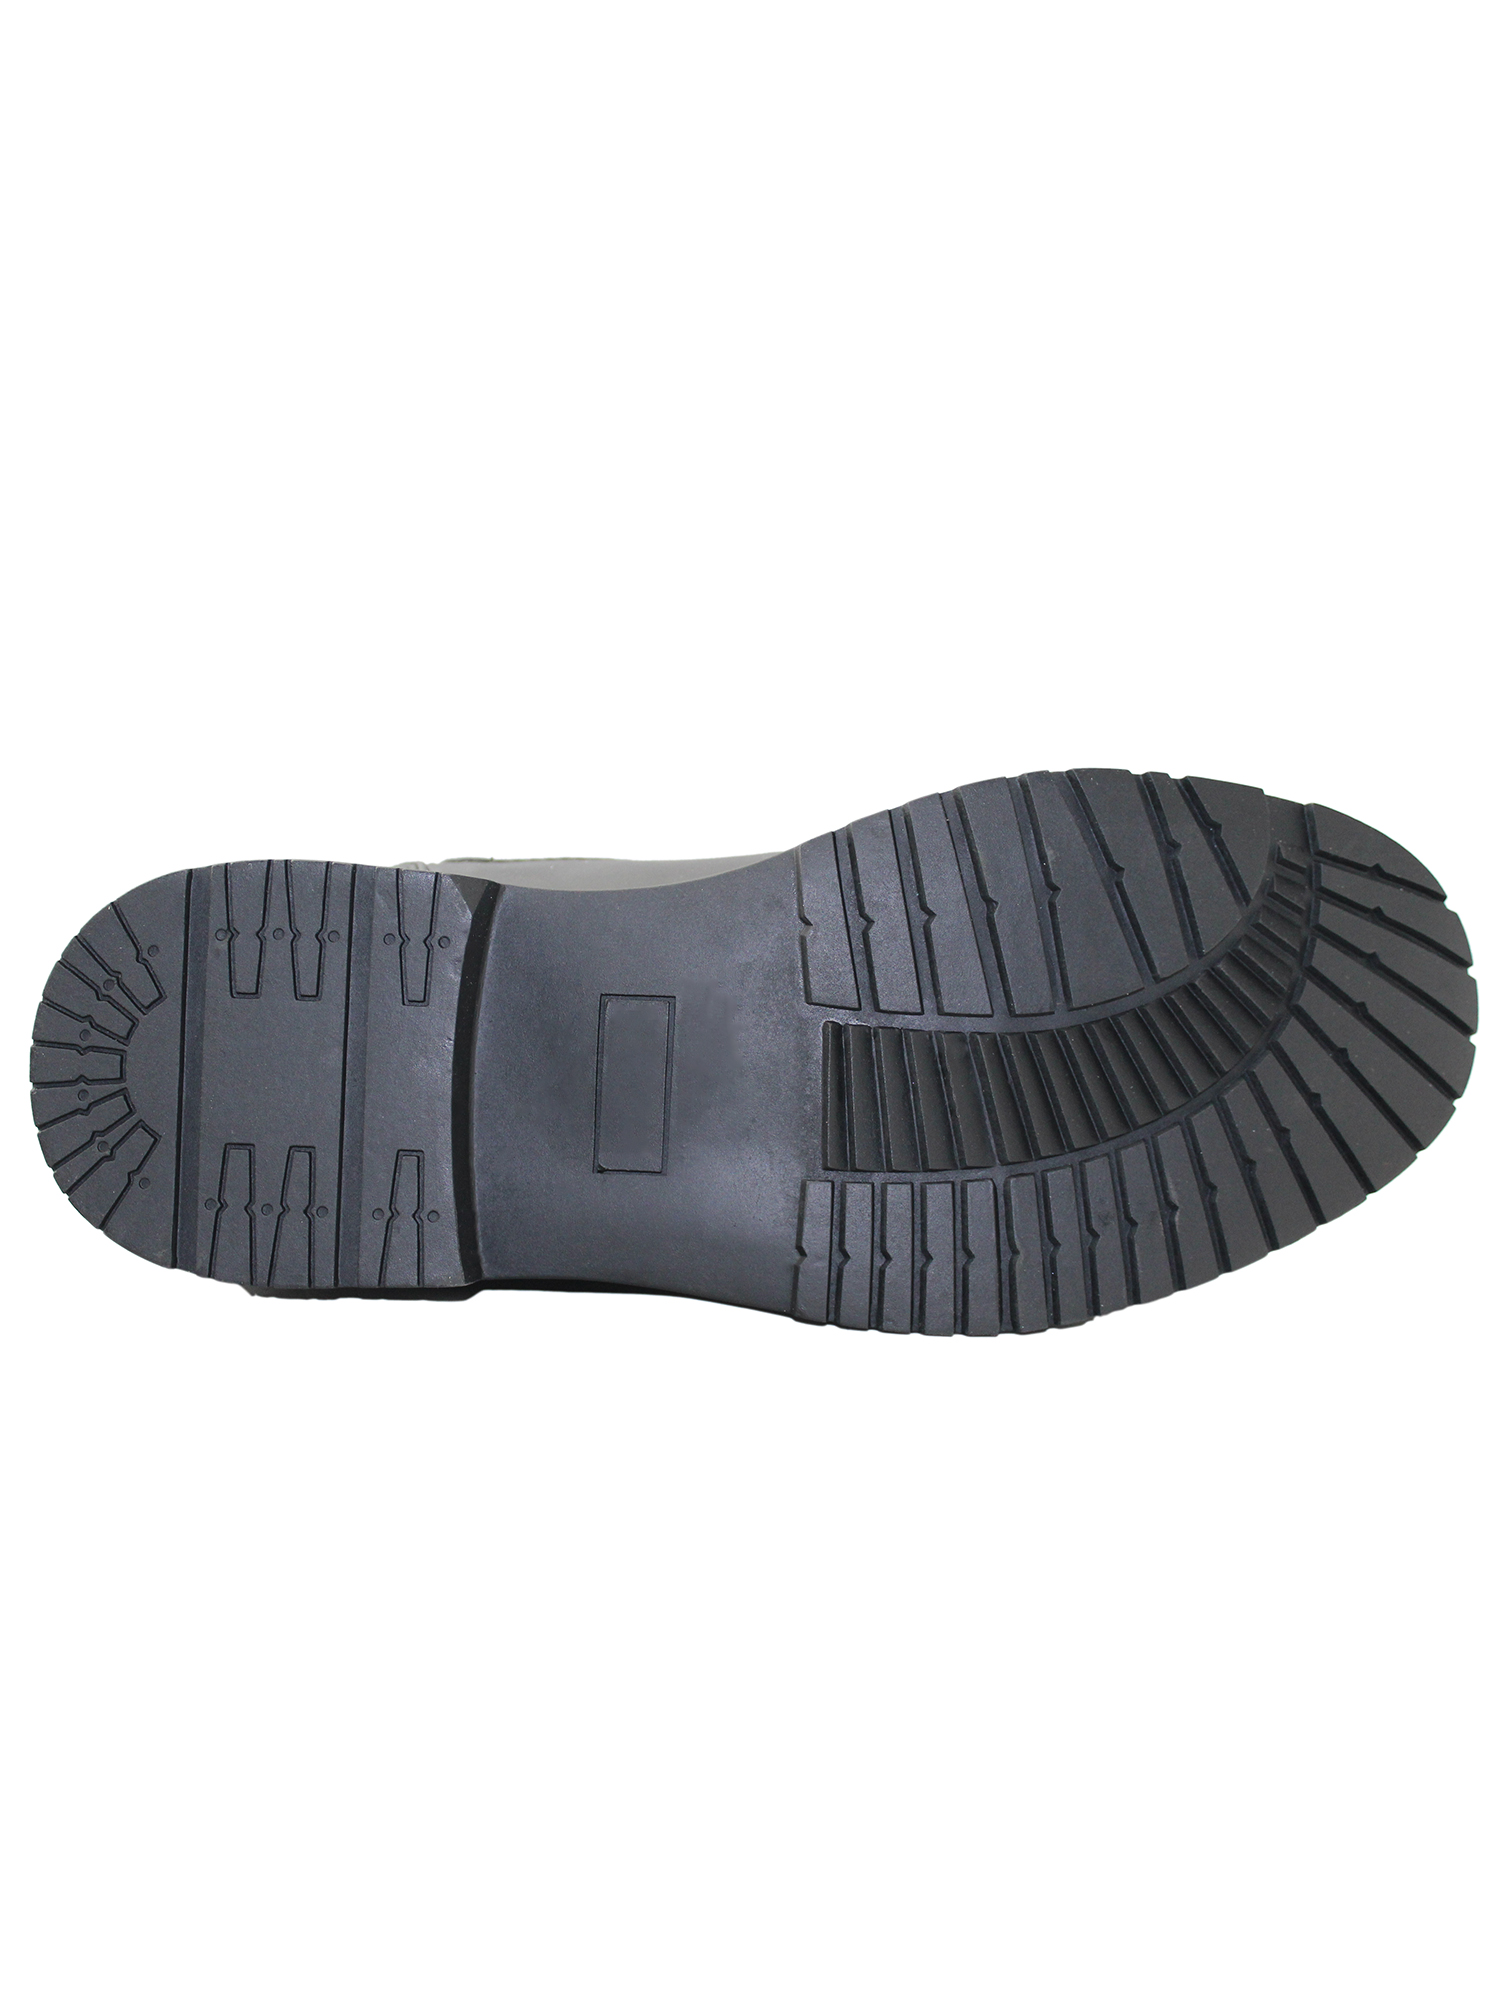 Tanleewa Men's Winter Boots Fur Lining Waterproof Non Slip Snow Boots Side Zipper Shoe Size 8 - image 5 of 6